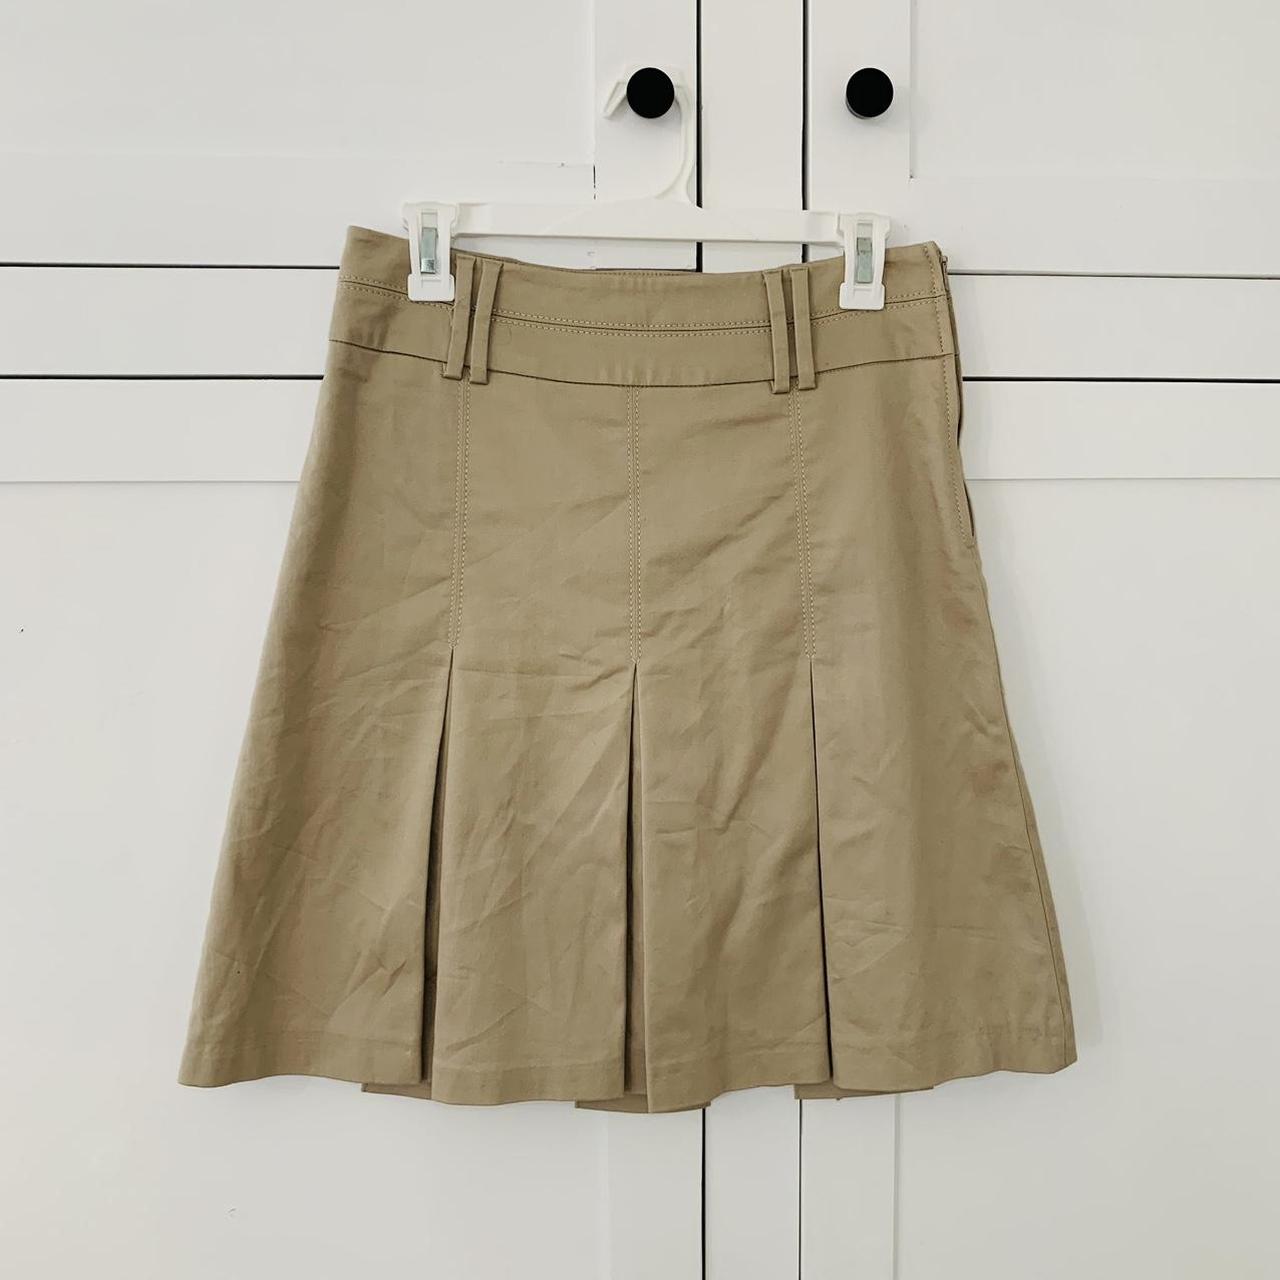 Hallhuber Women's Tan Skirt